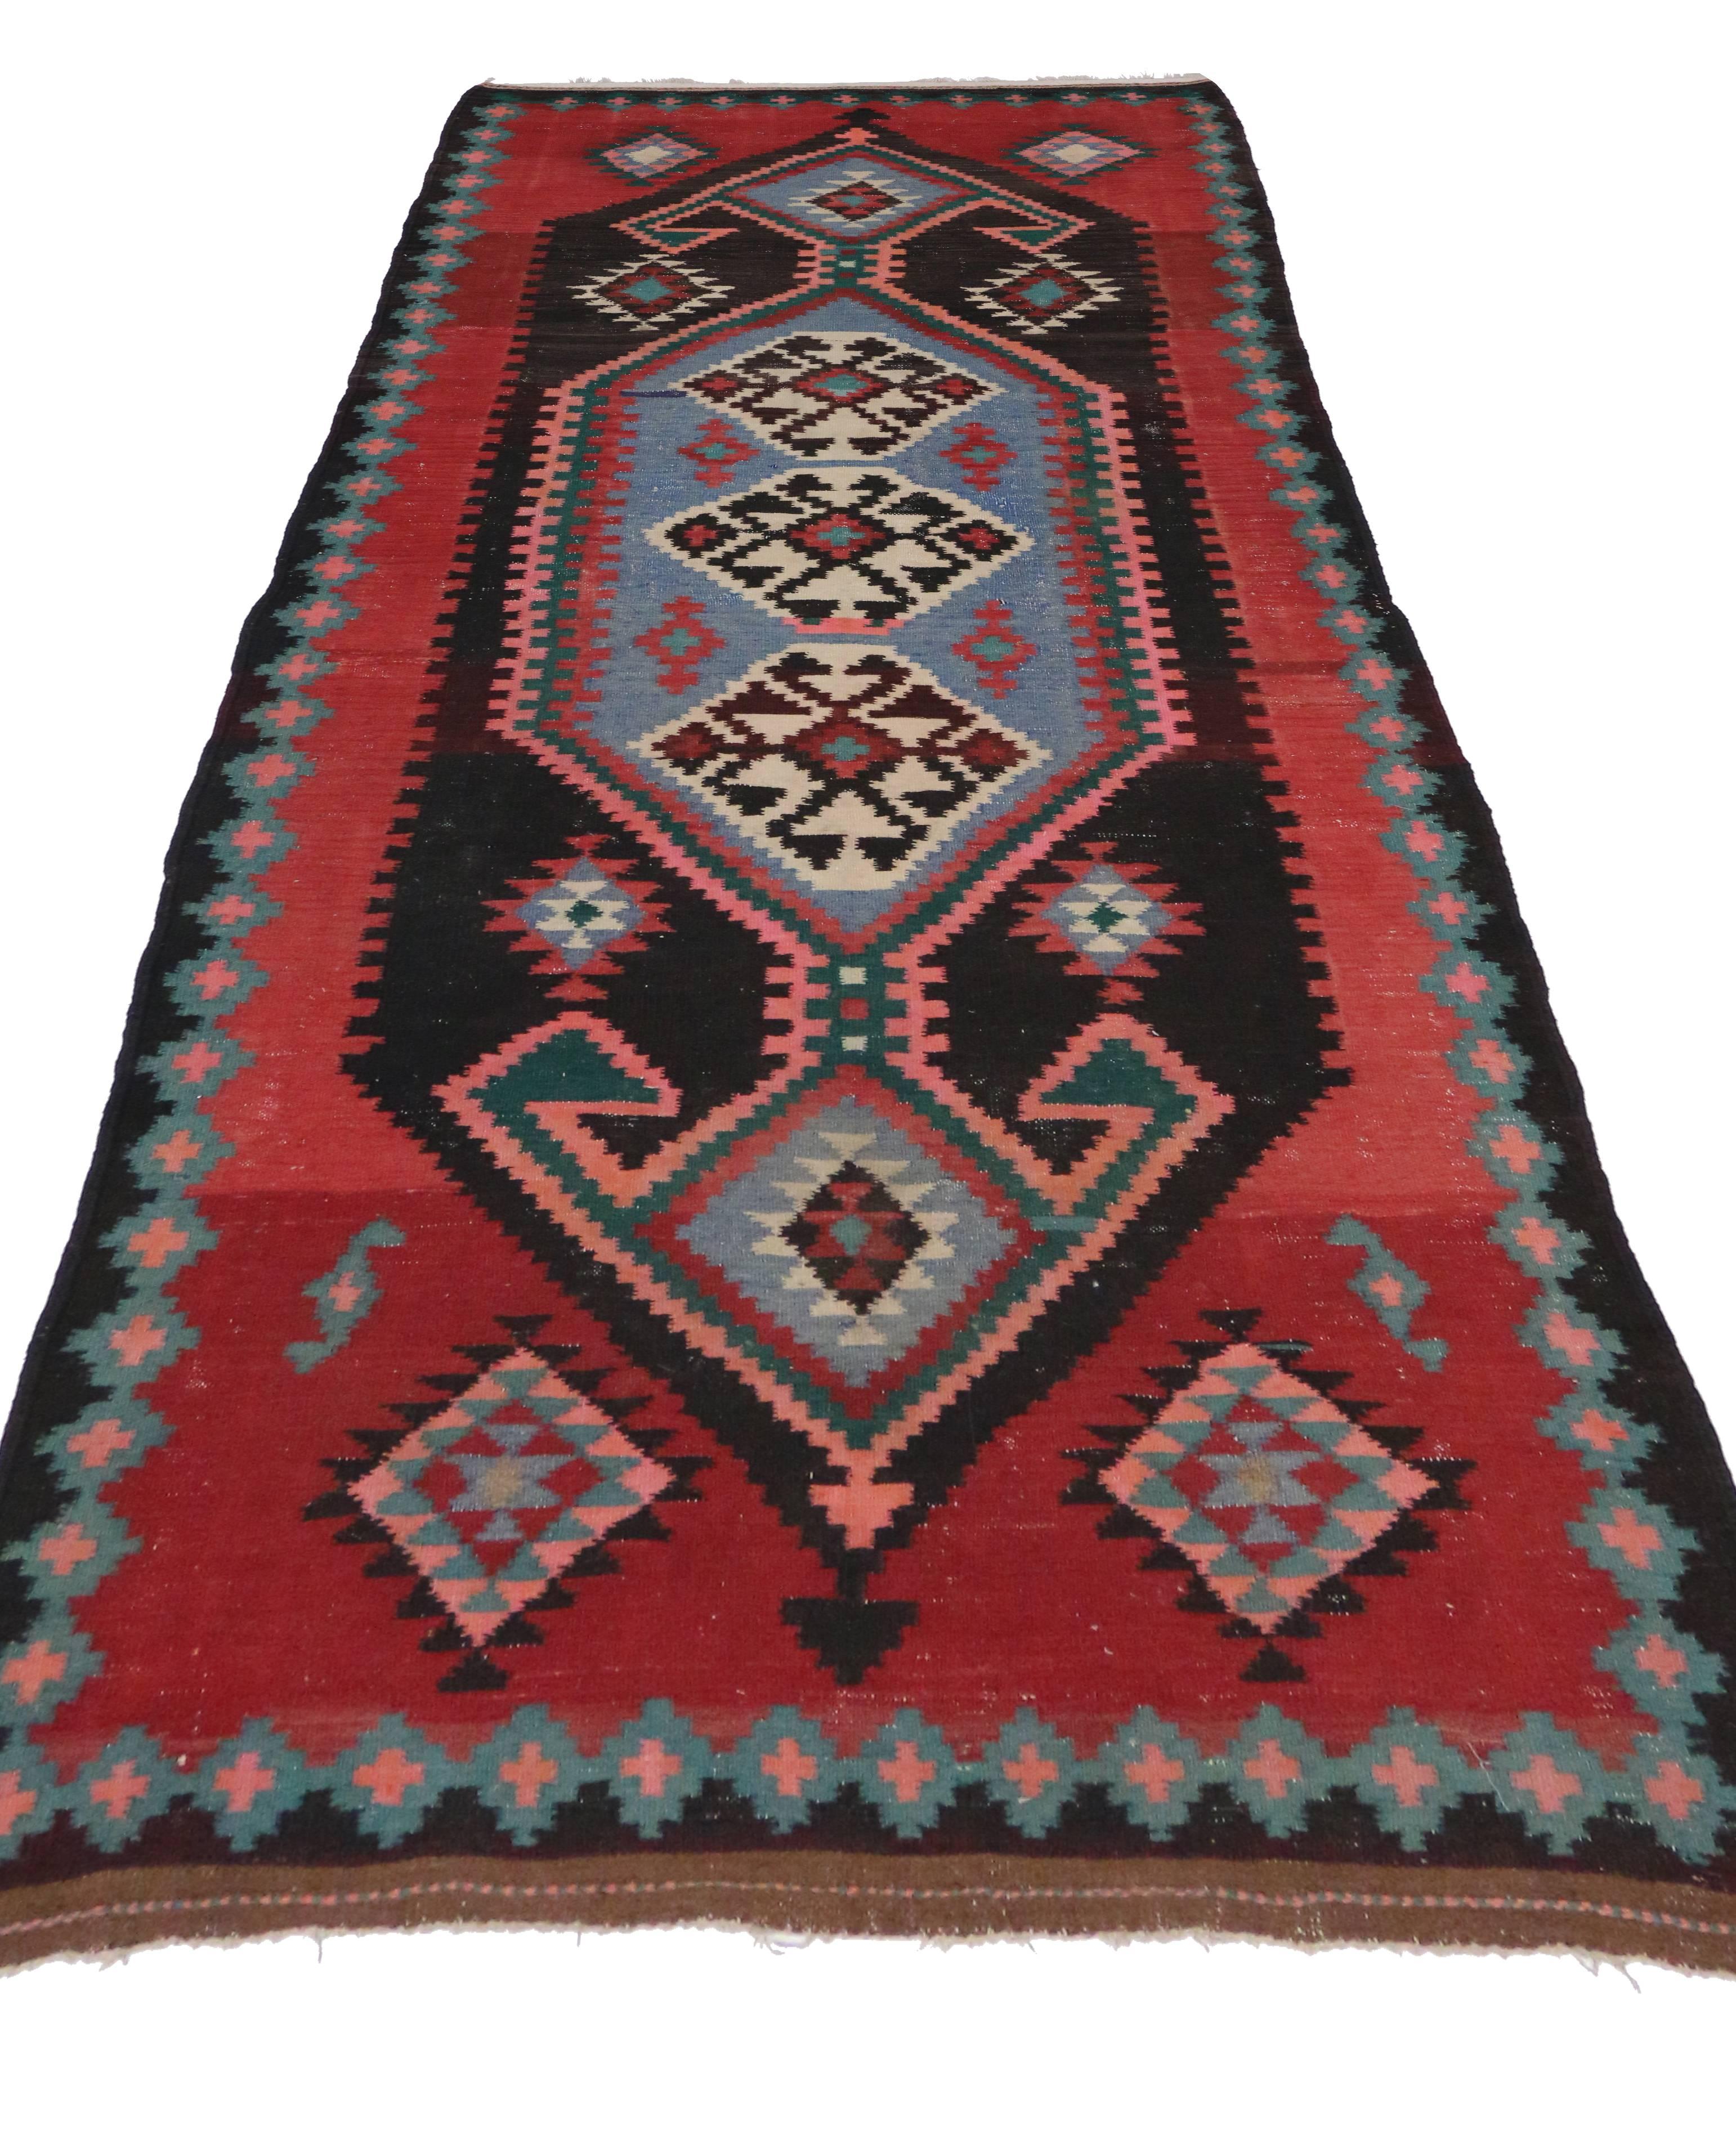 Hand-Woven Vintage Persian Tribal Kilim Rug with Modern Style, Kilim Runner